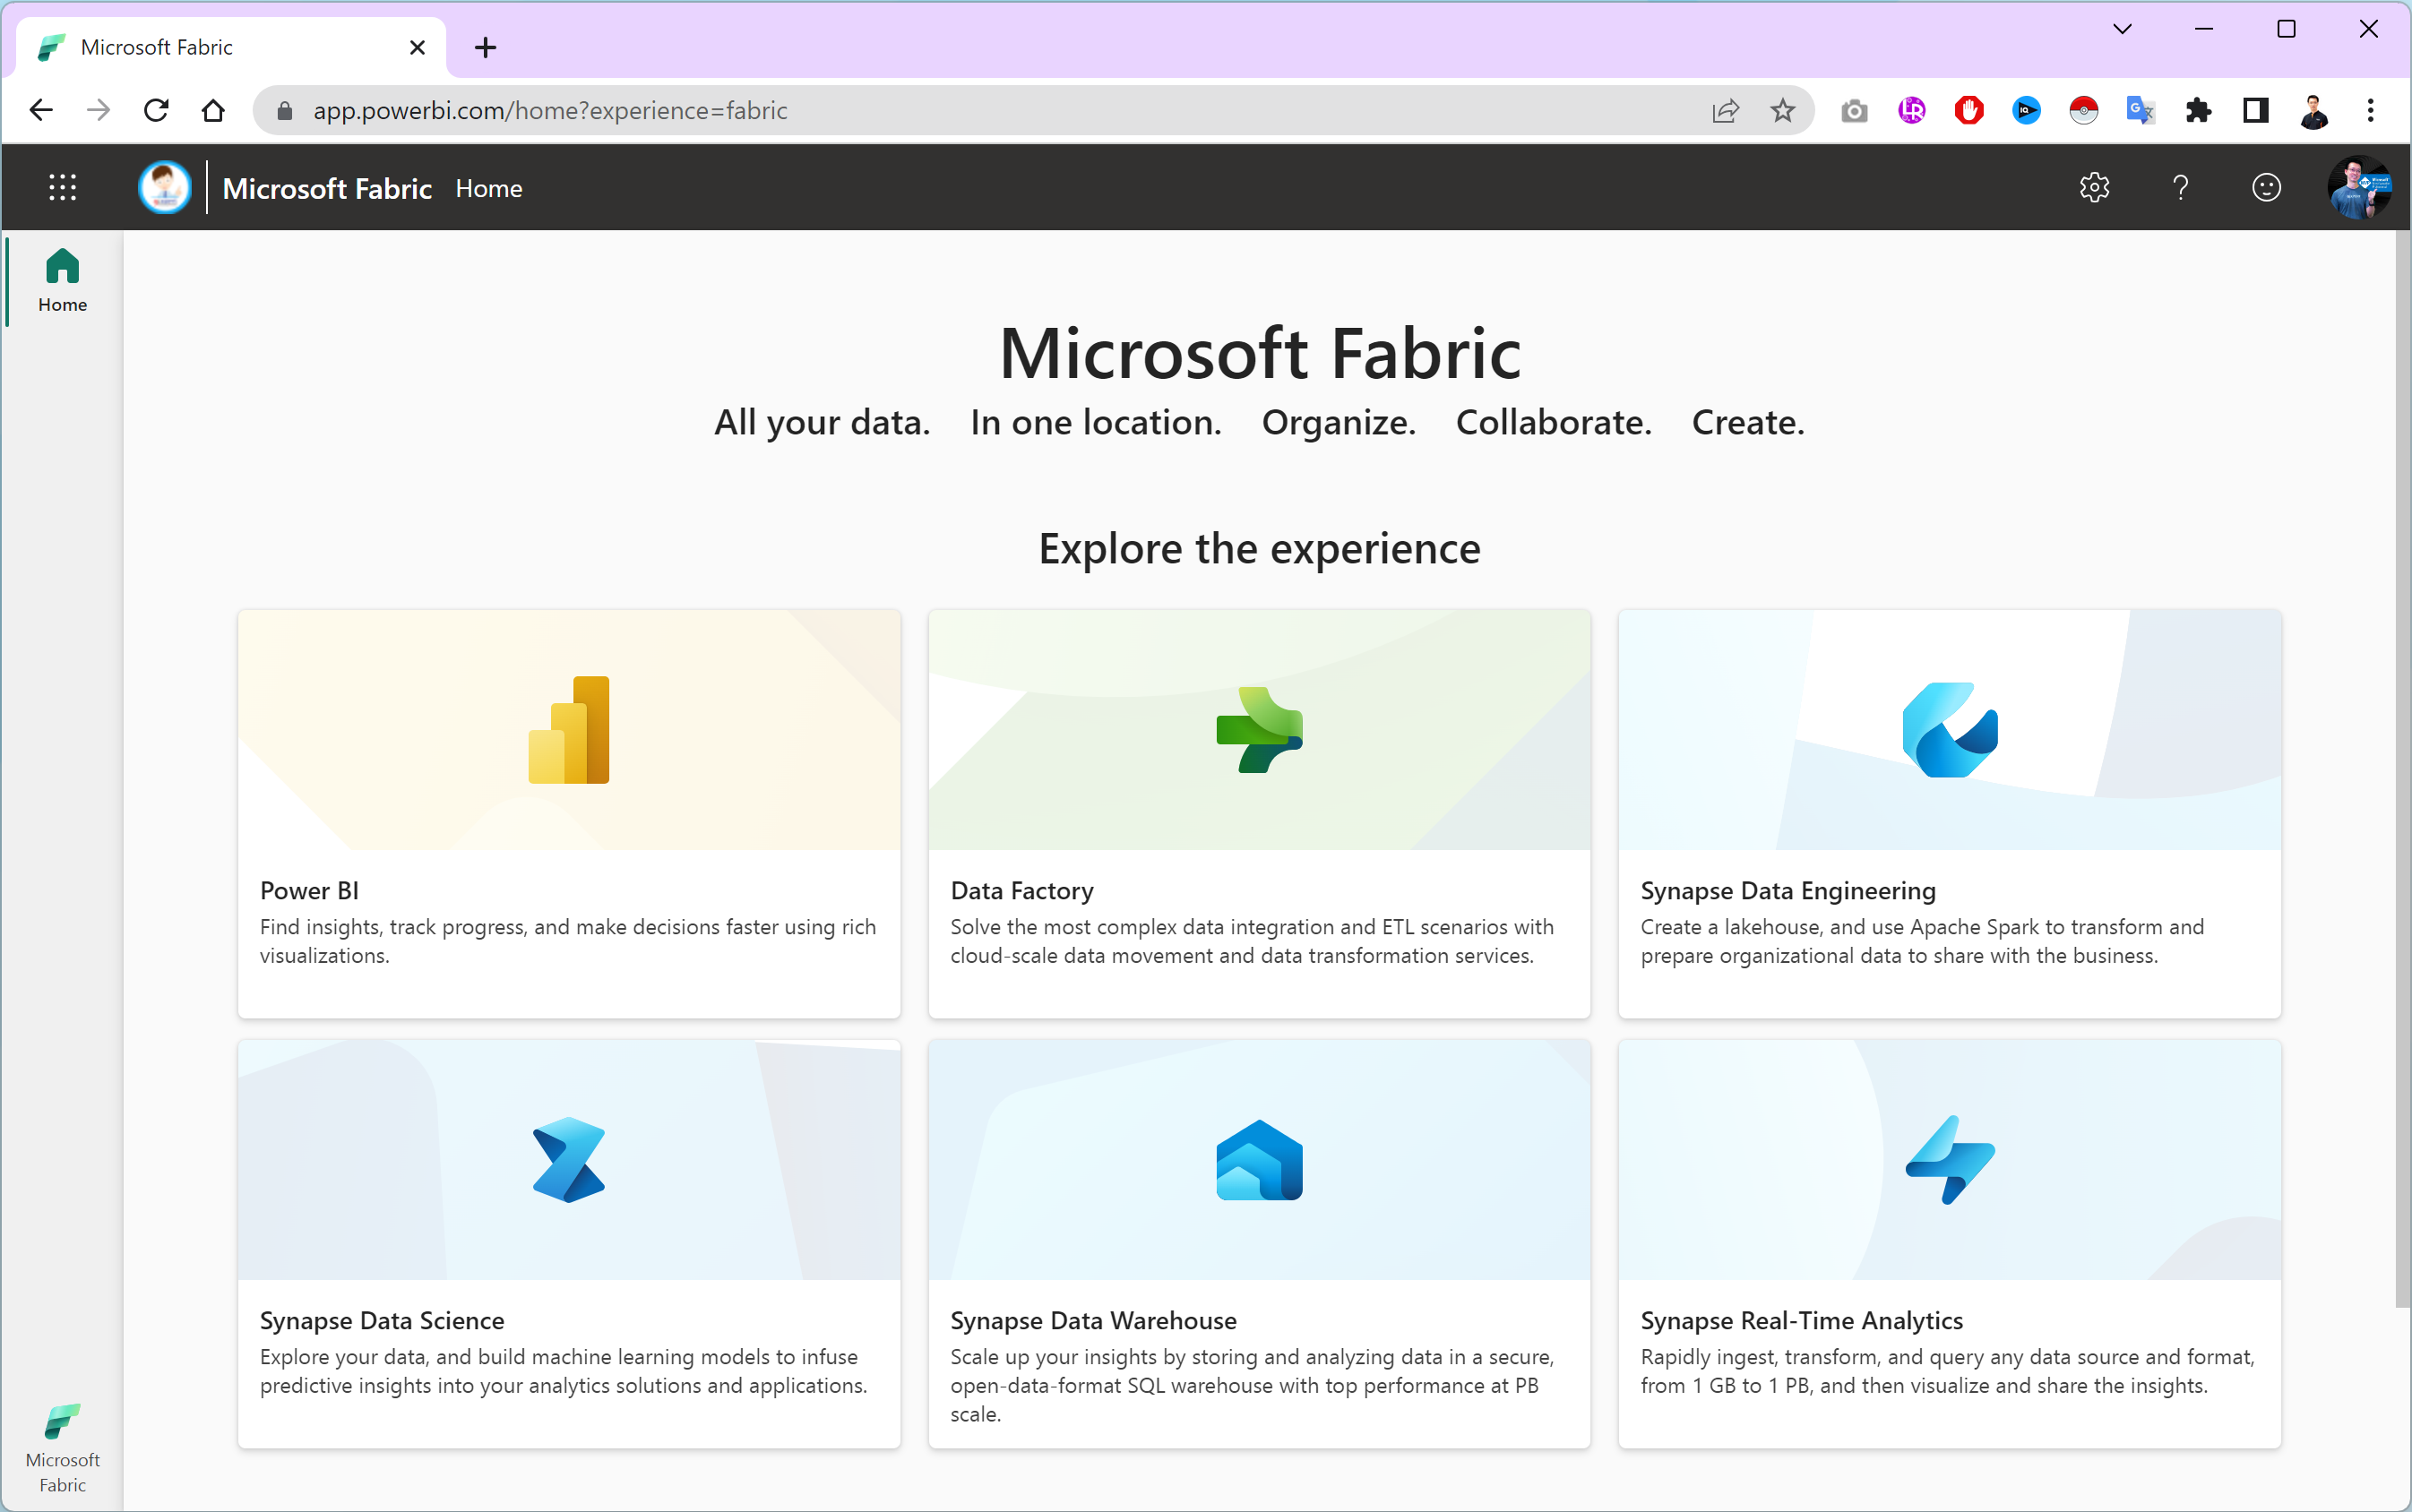 Microsoft Fabric คืออะไร